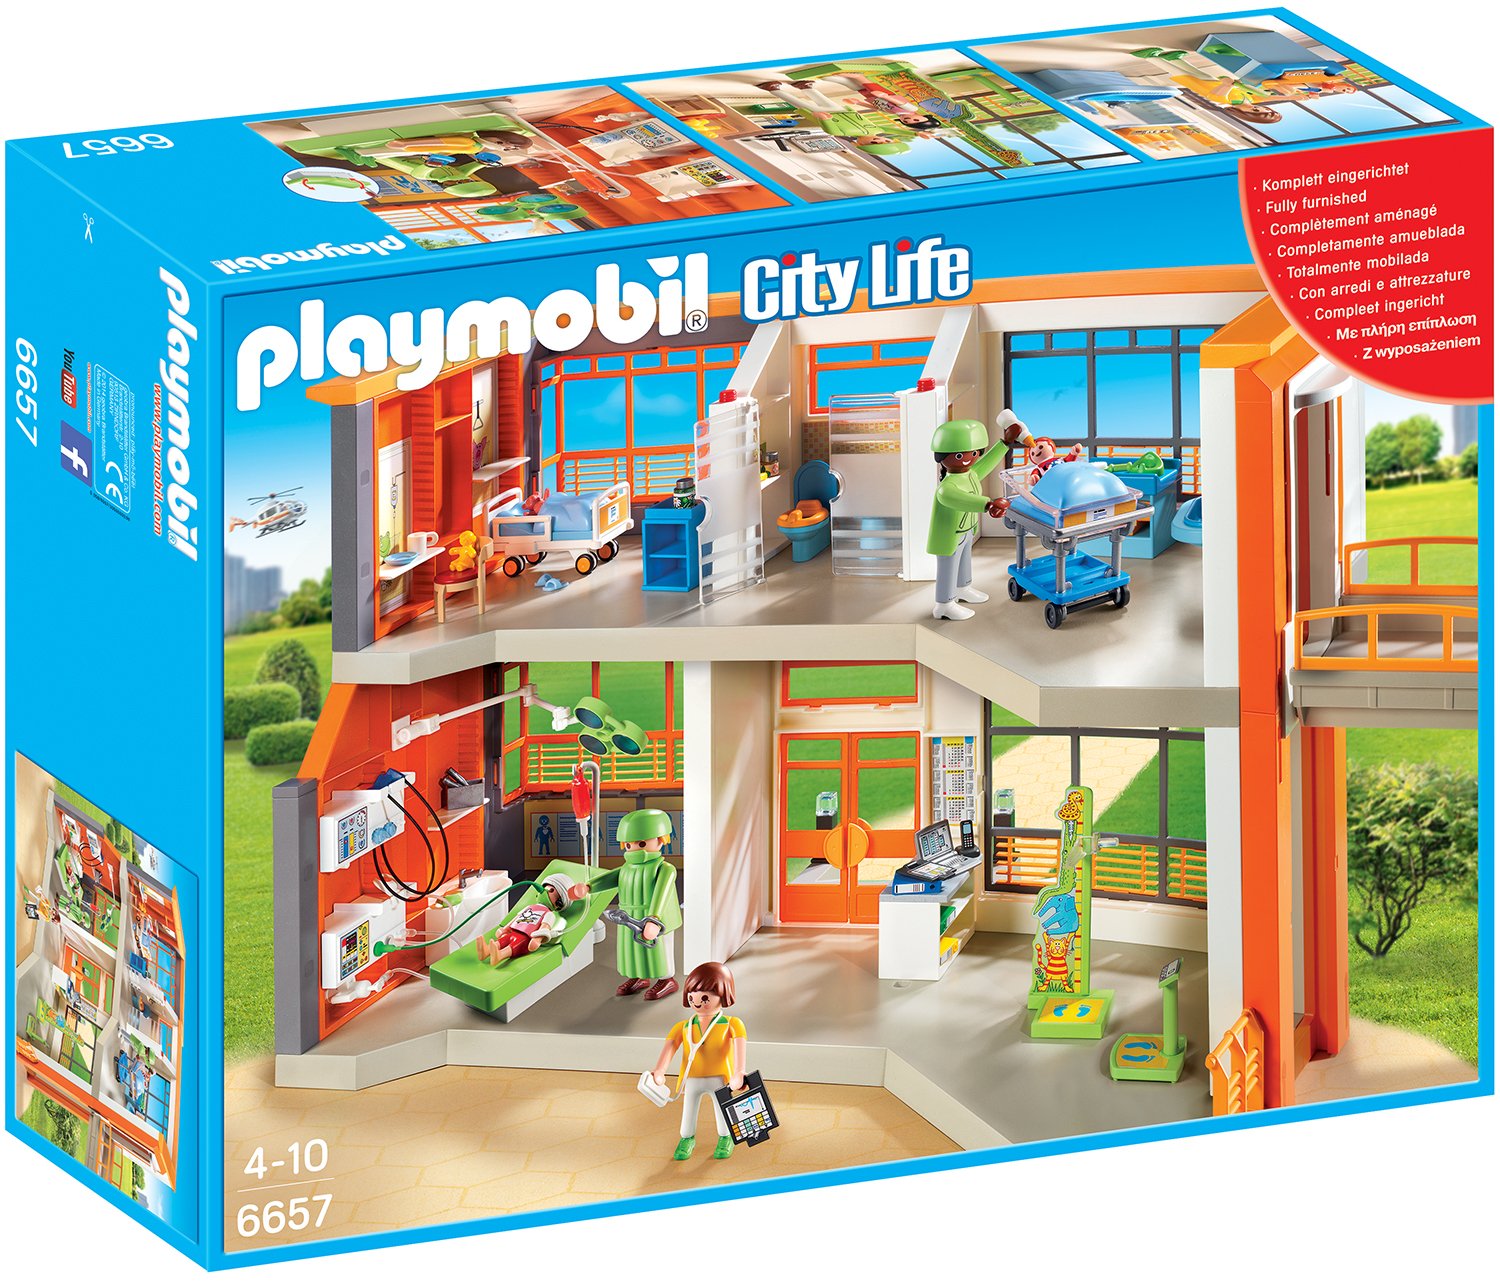 Playmobil City Life Furnished Childrens Hospital